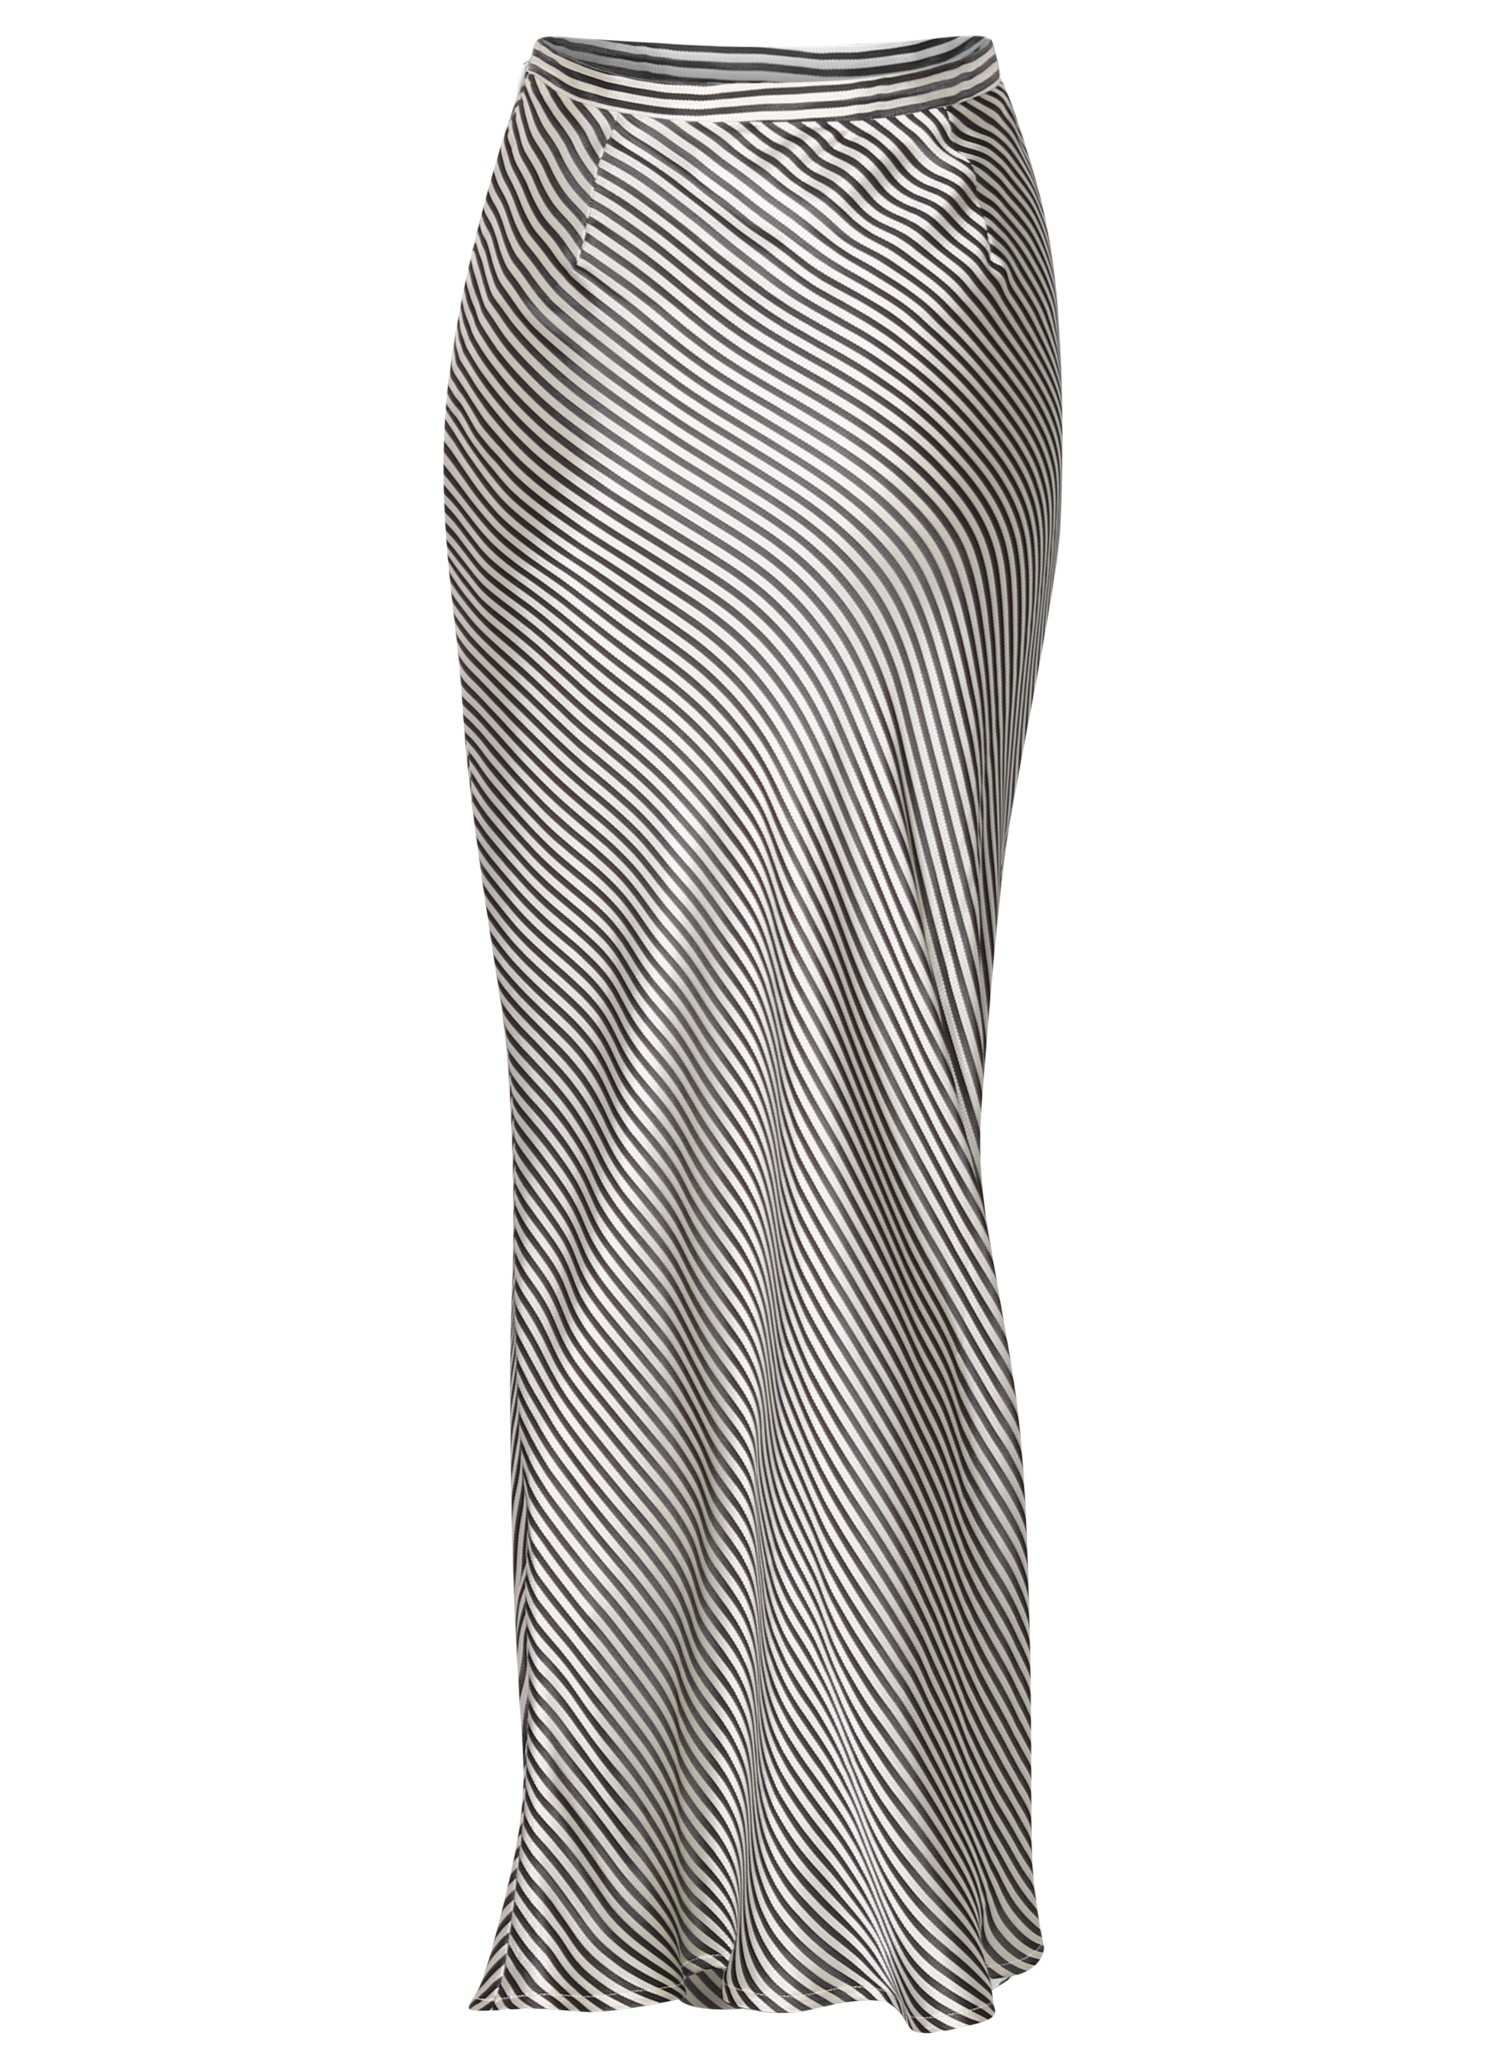 DAGMAR Long Silk Skirt in Black/Ecru Stripe